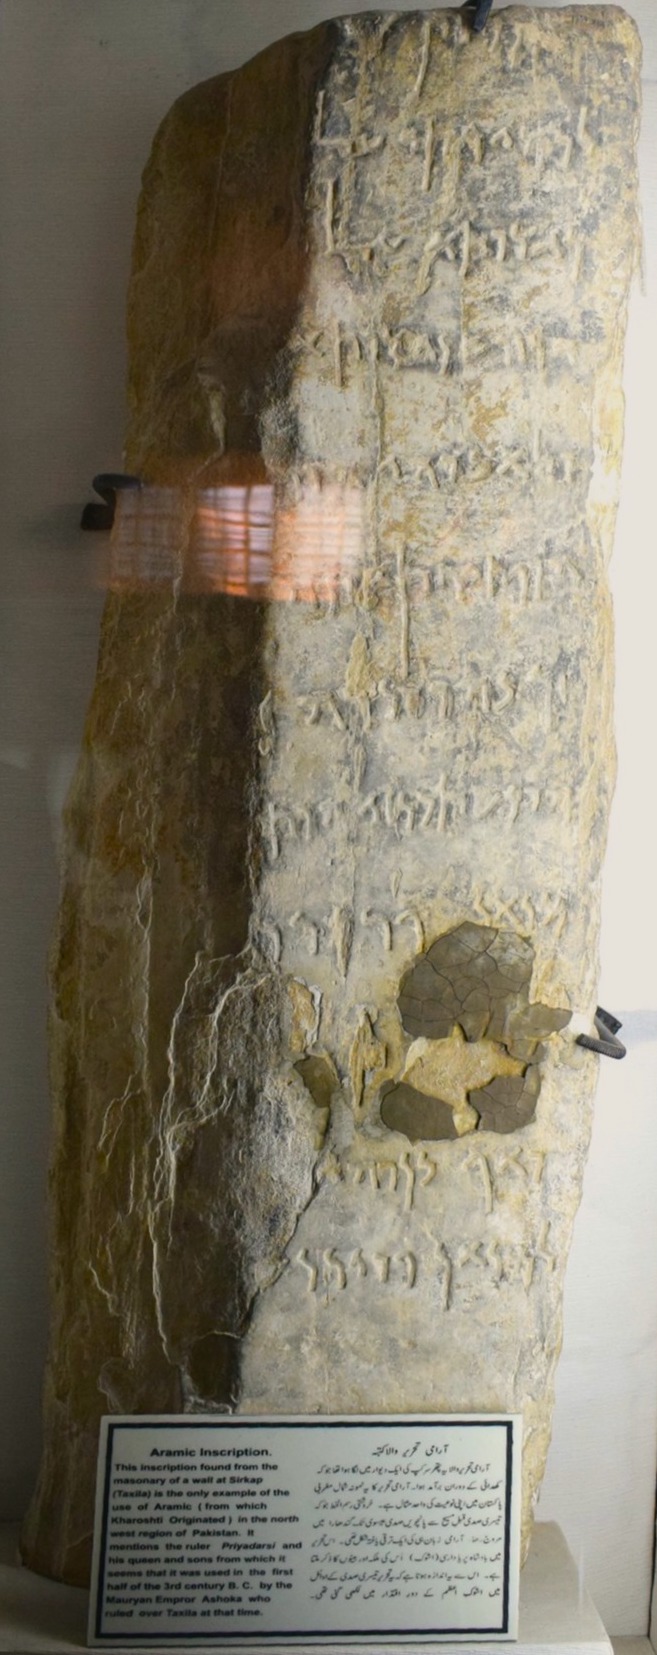 Aramaic_inscription_at_Taxila_Museum.jpg